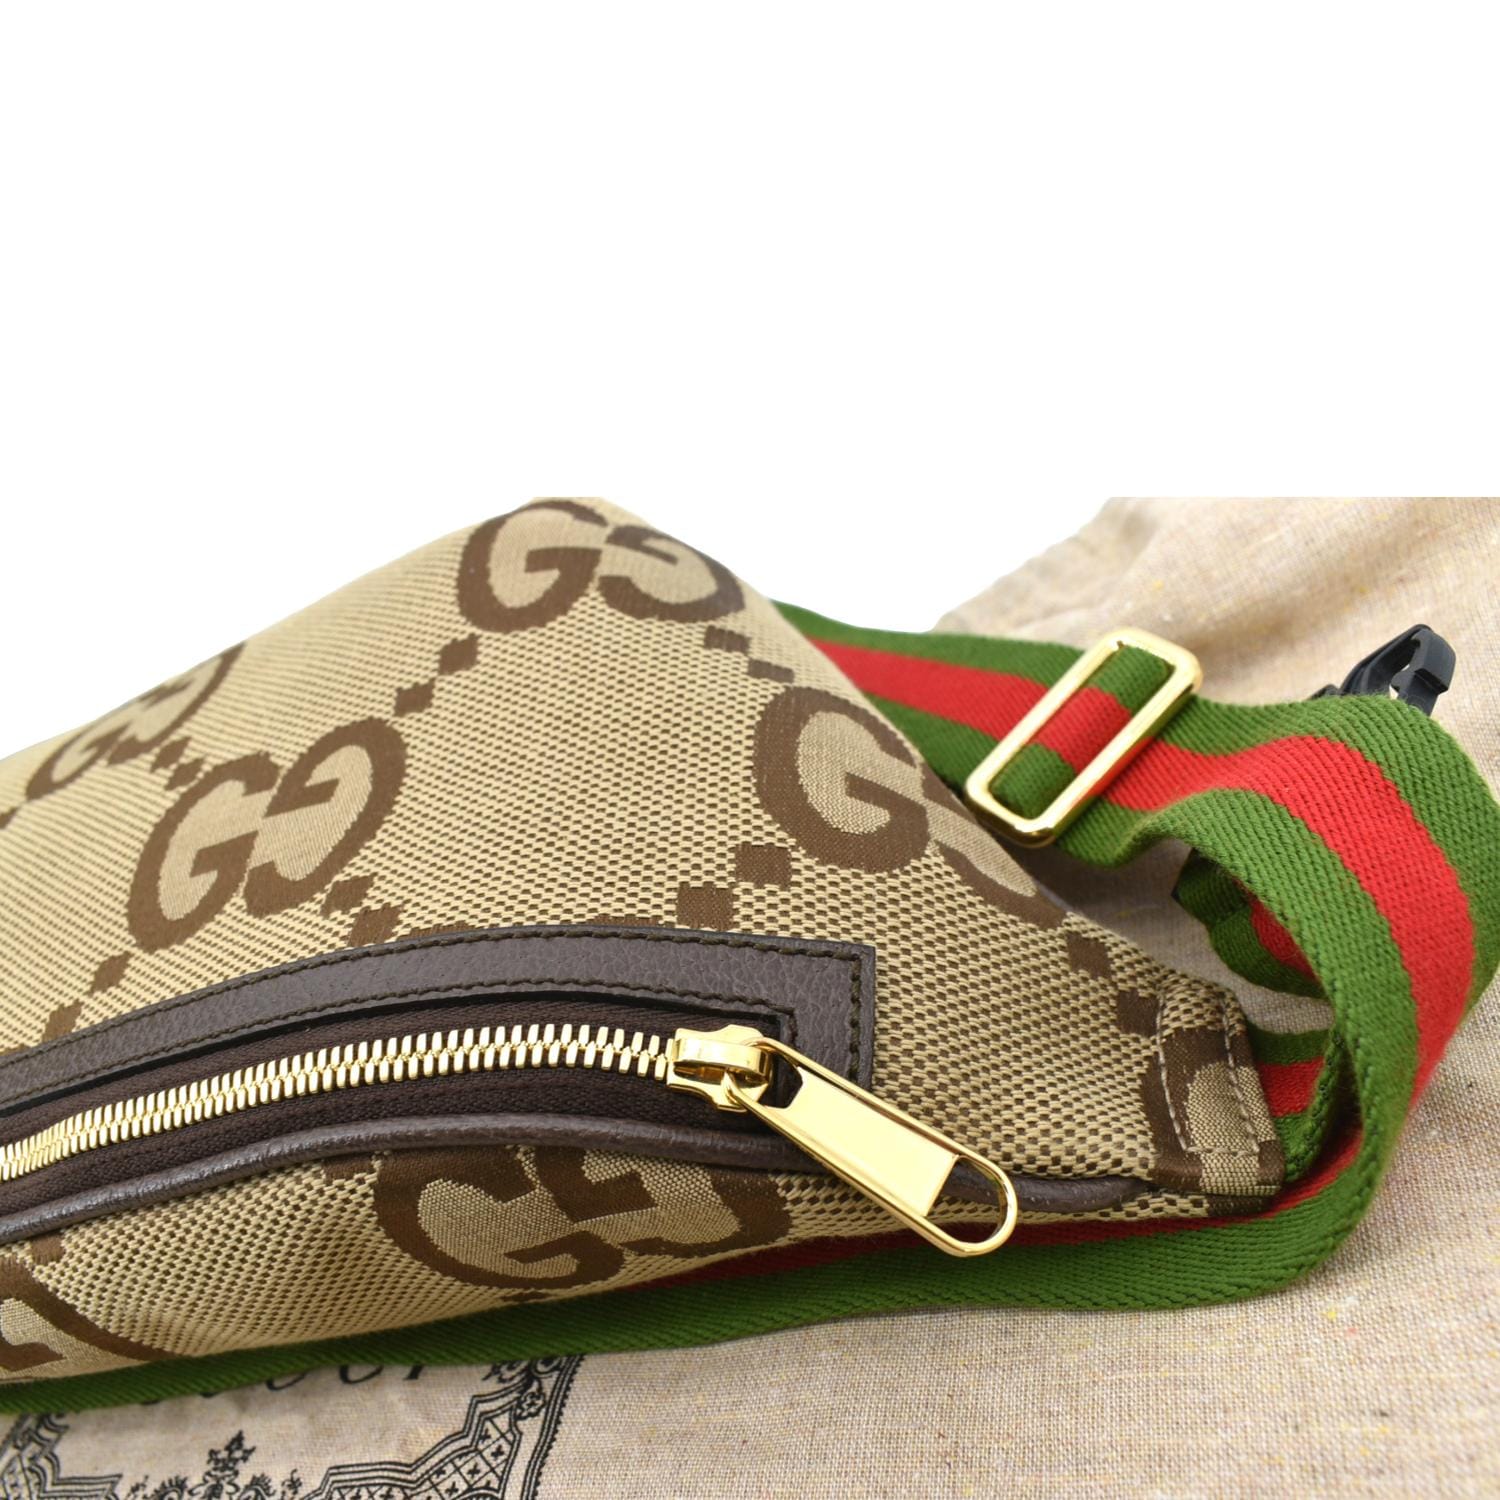 Jumbo GG small belt bag in dark green leather